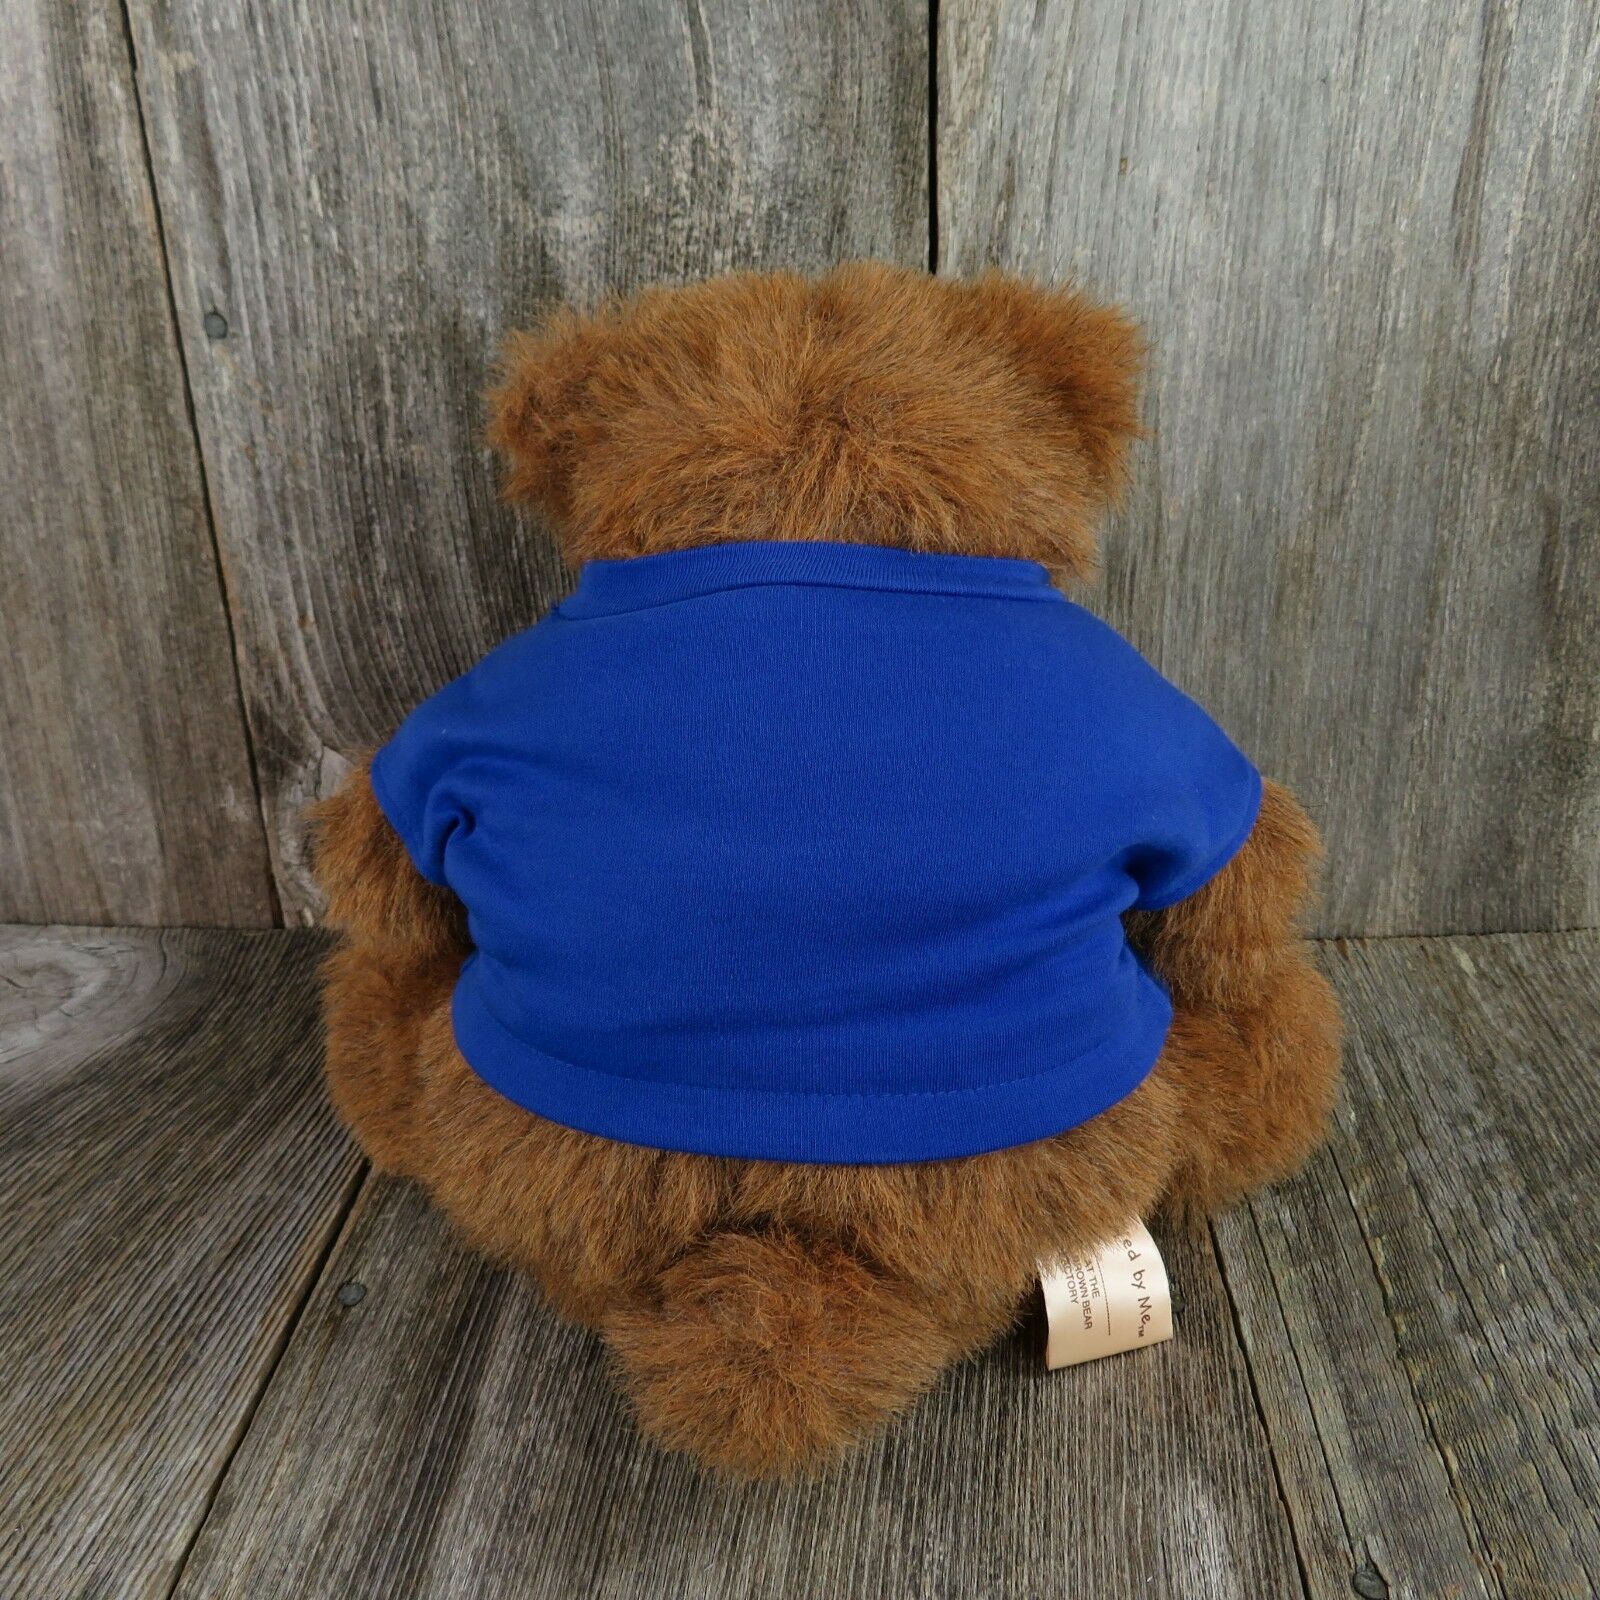 Vintage Teddy Bear Plush San Francisco Basic Brown Factory Souvenir Build Stuffed Animal - At Grandma's Table